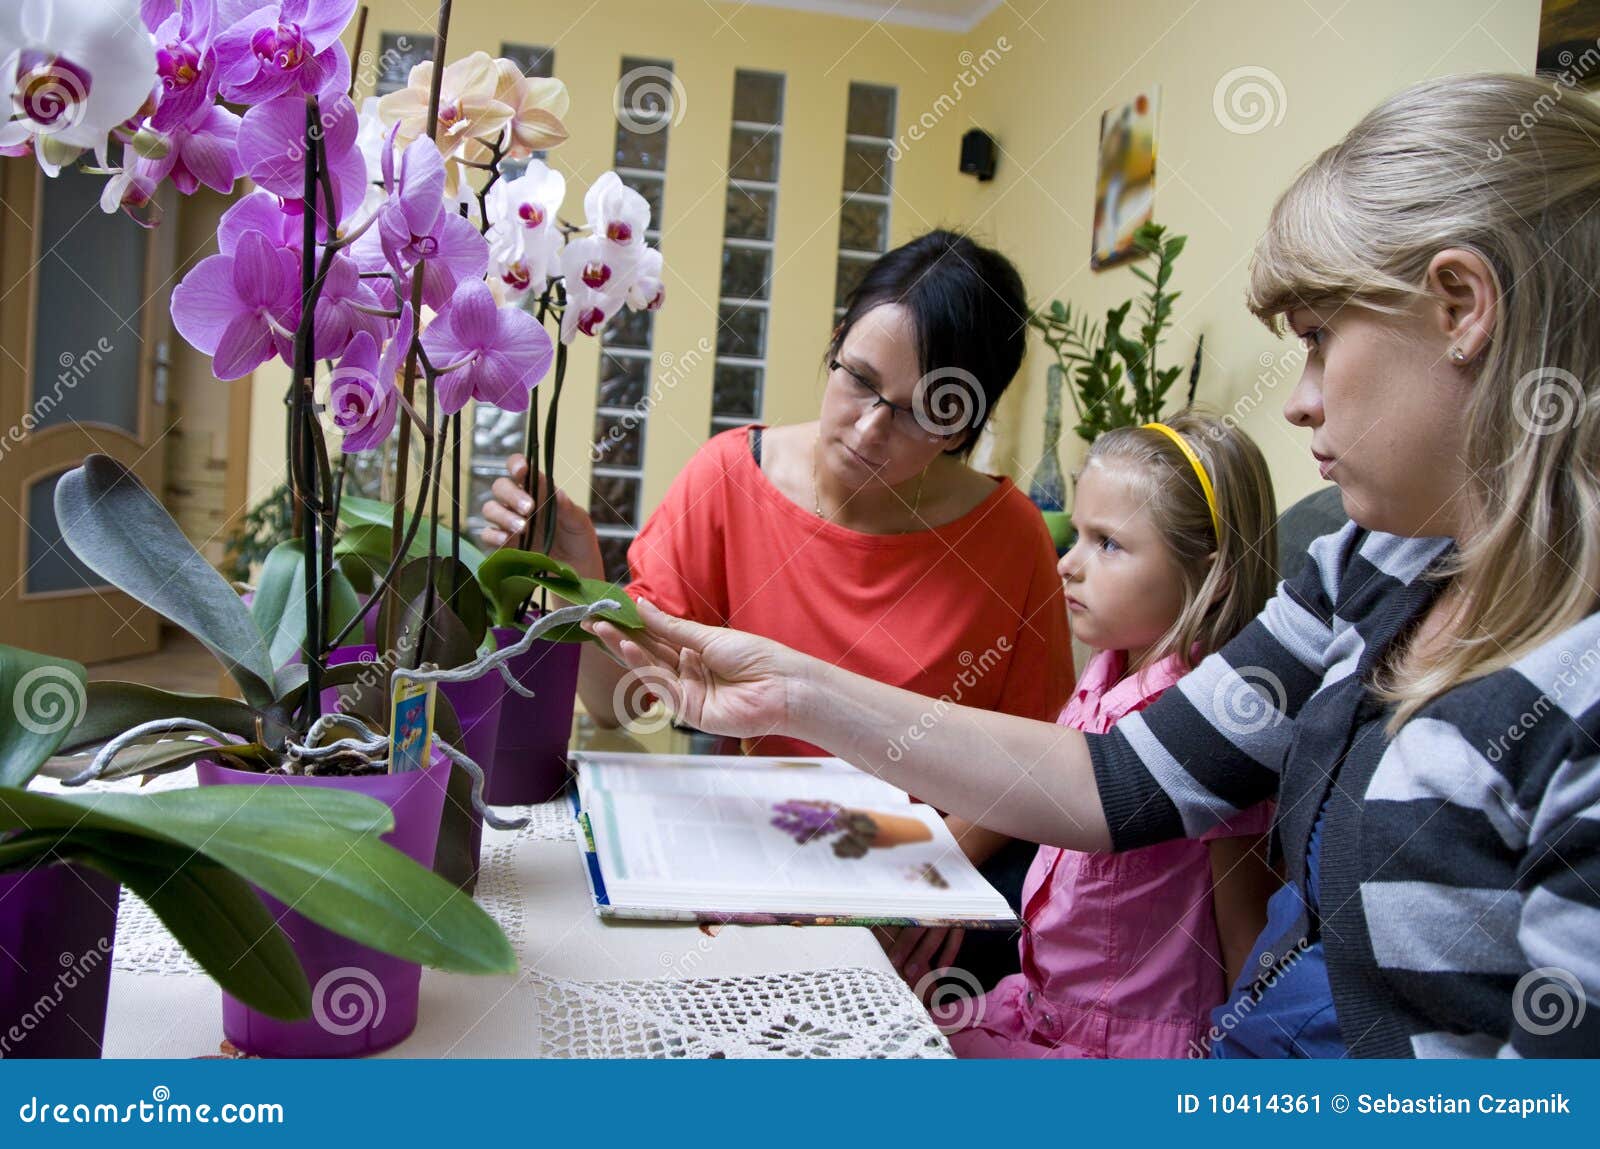 home schooling - flowers